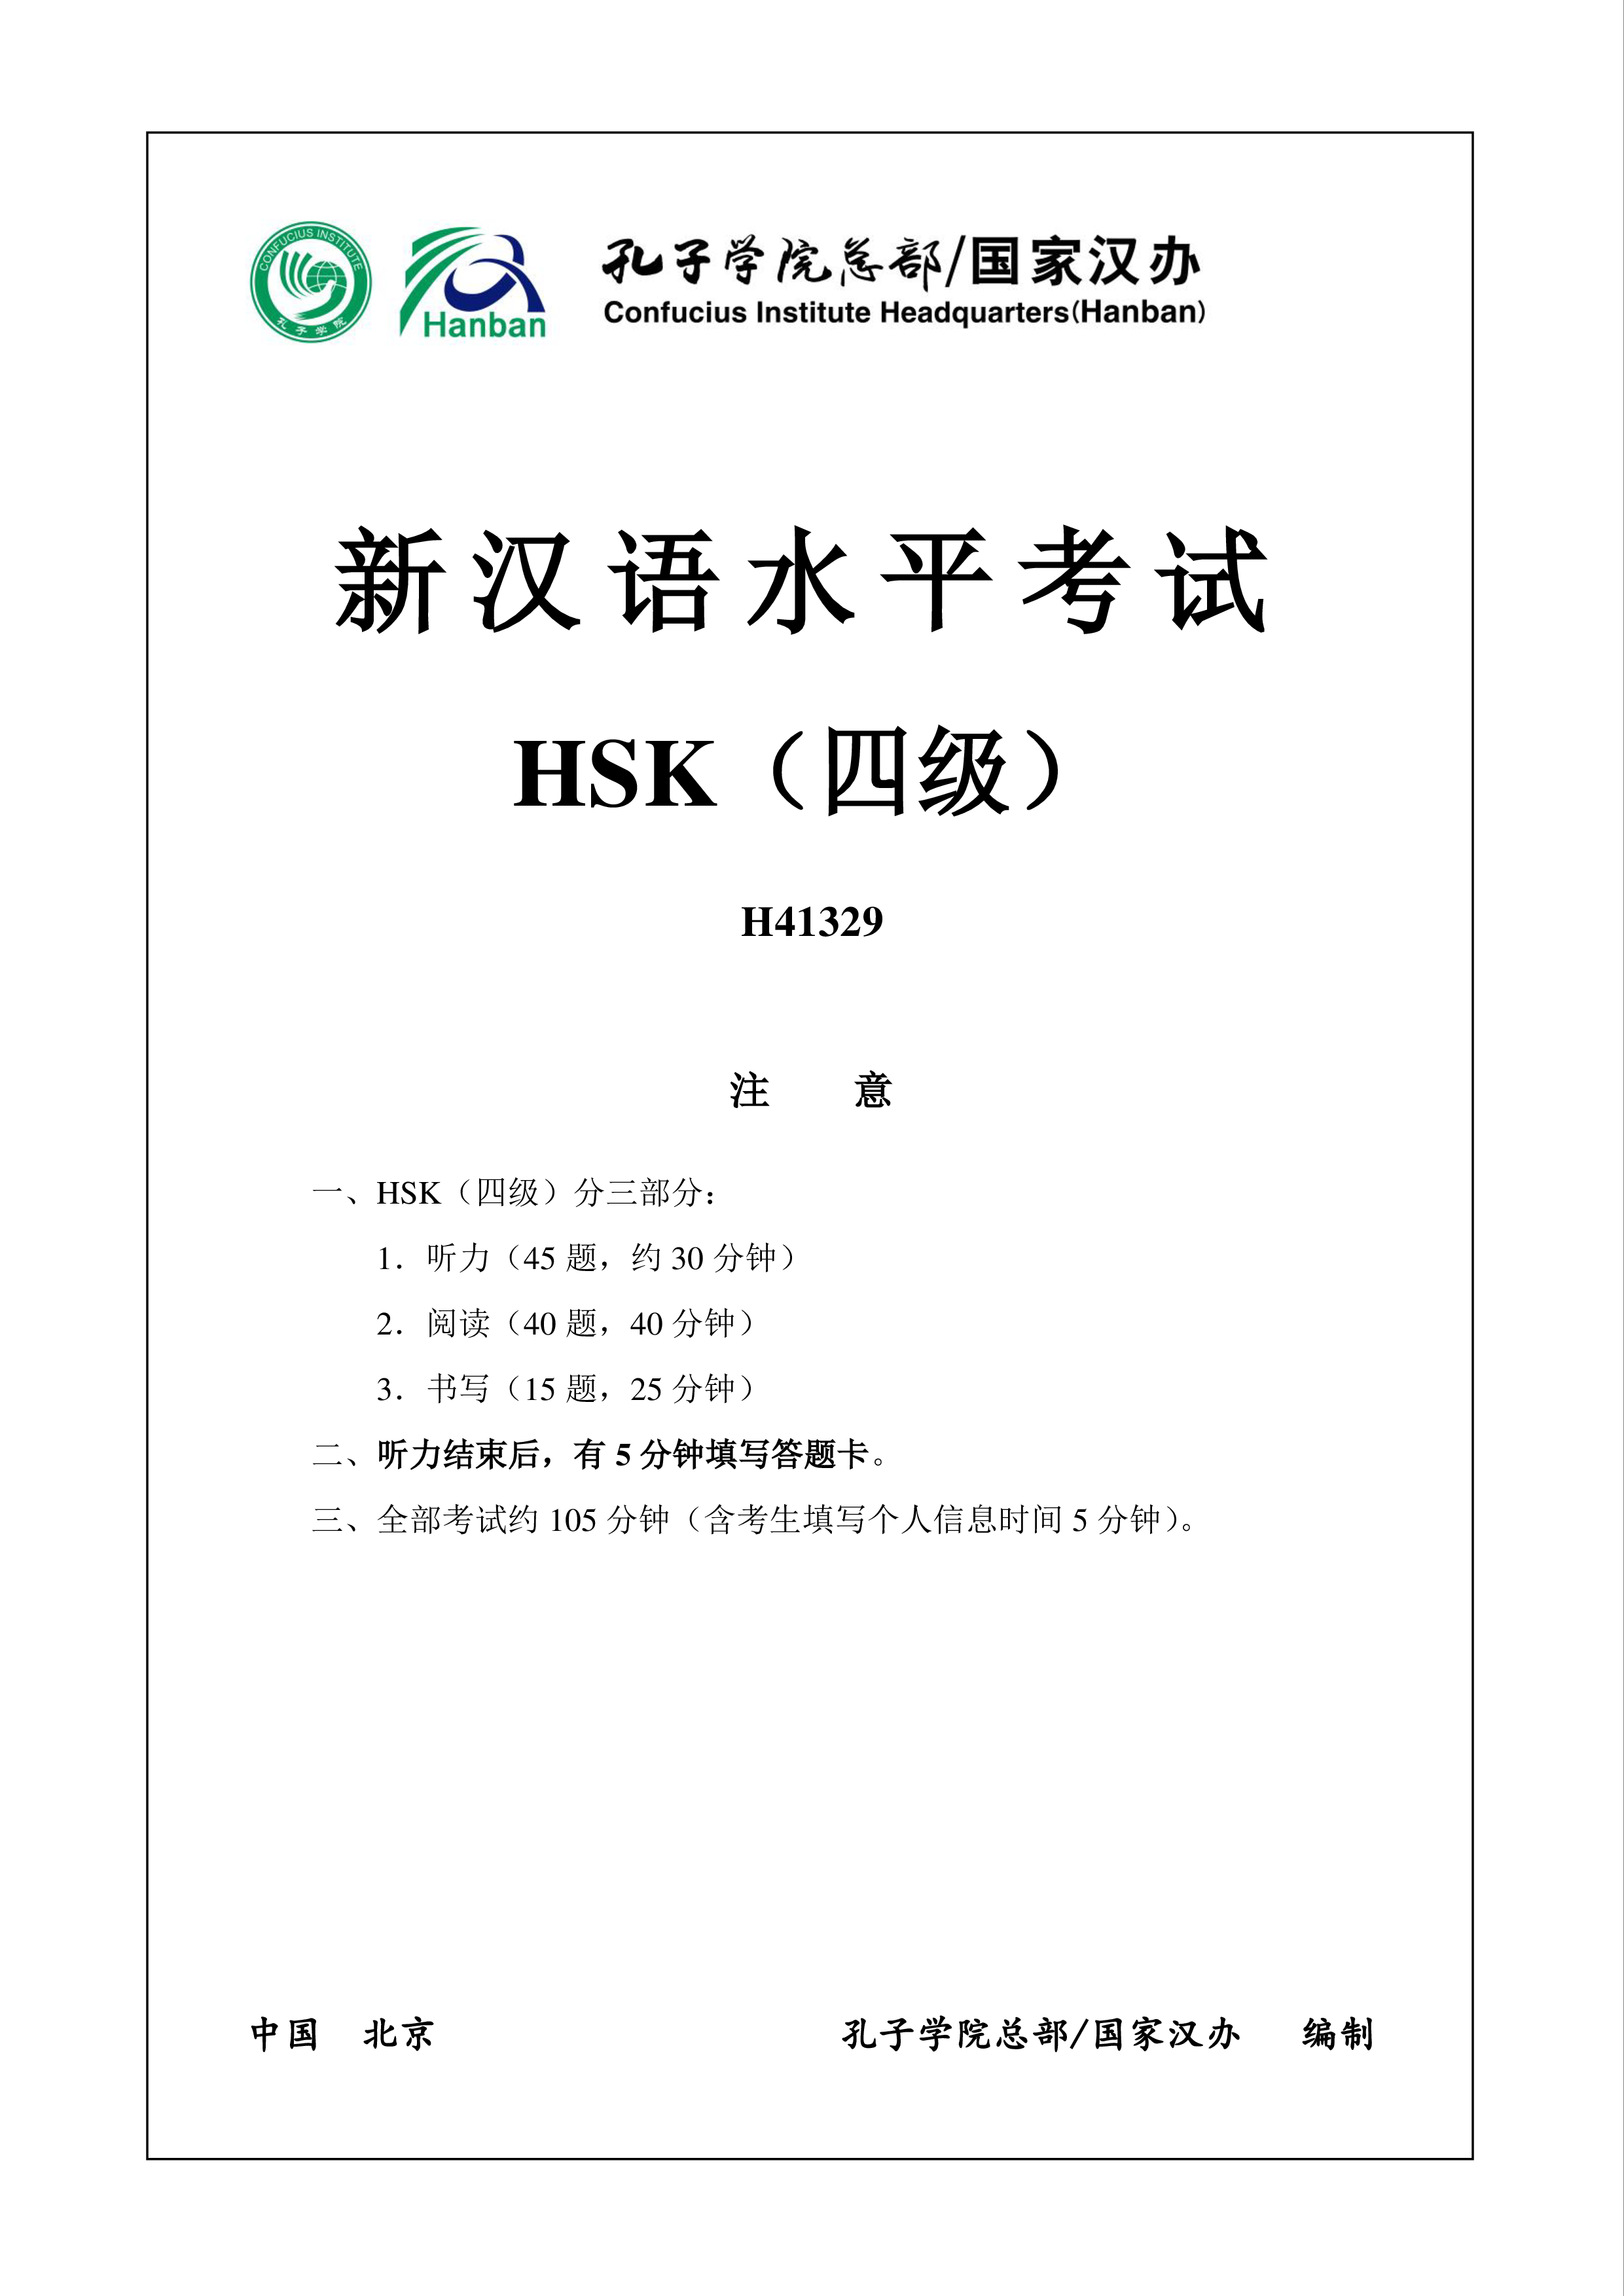 HSK4 Chinees Examen H41329 main image